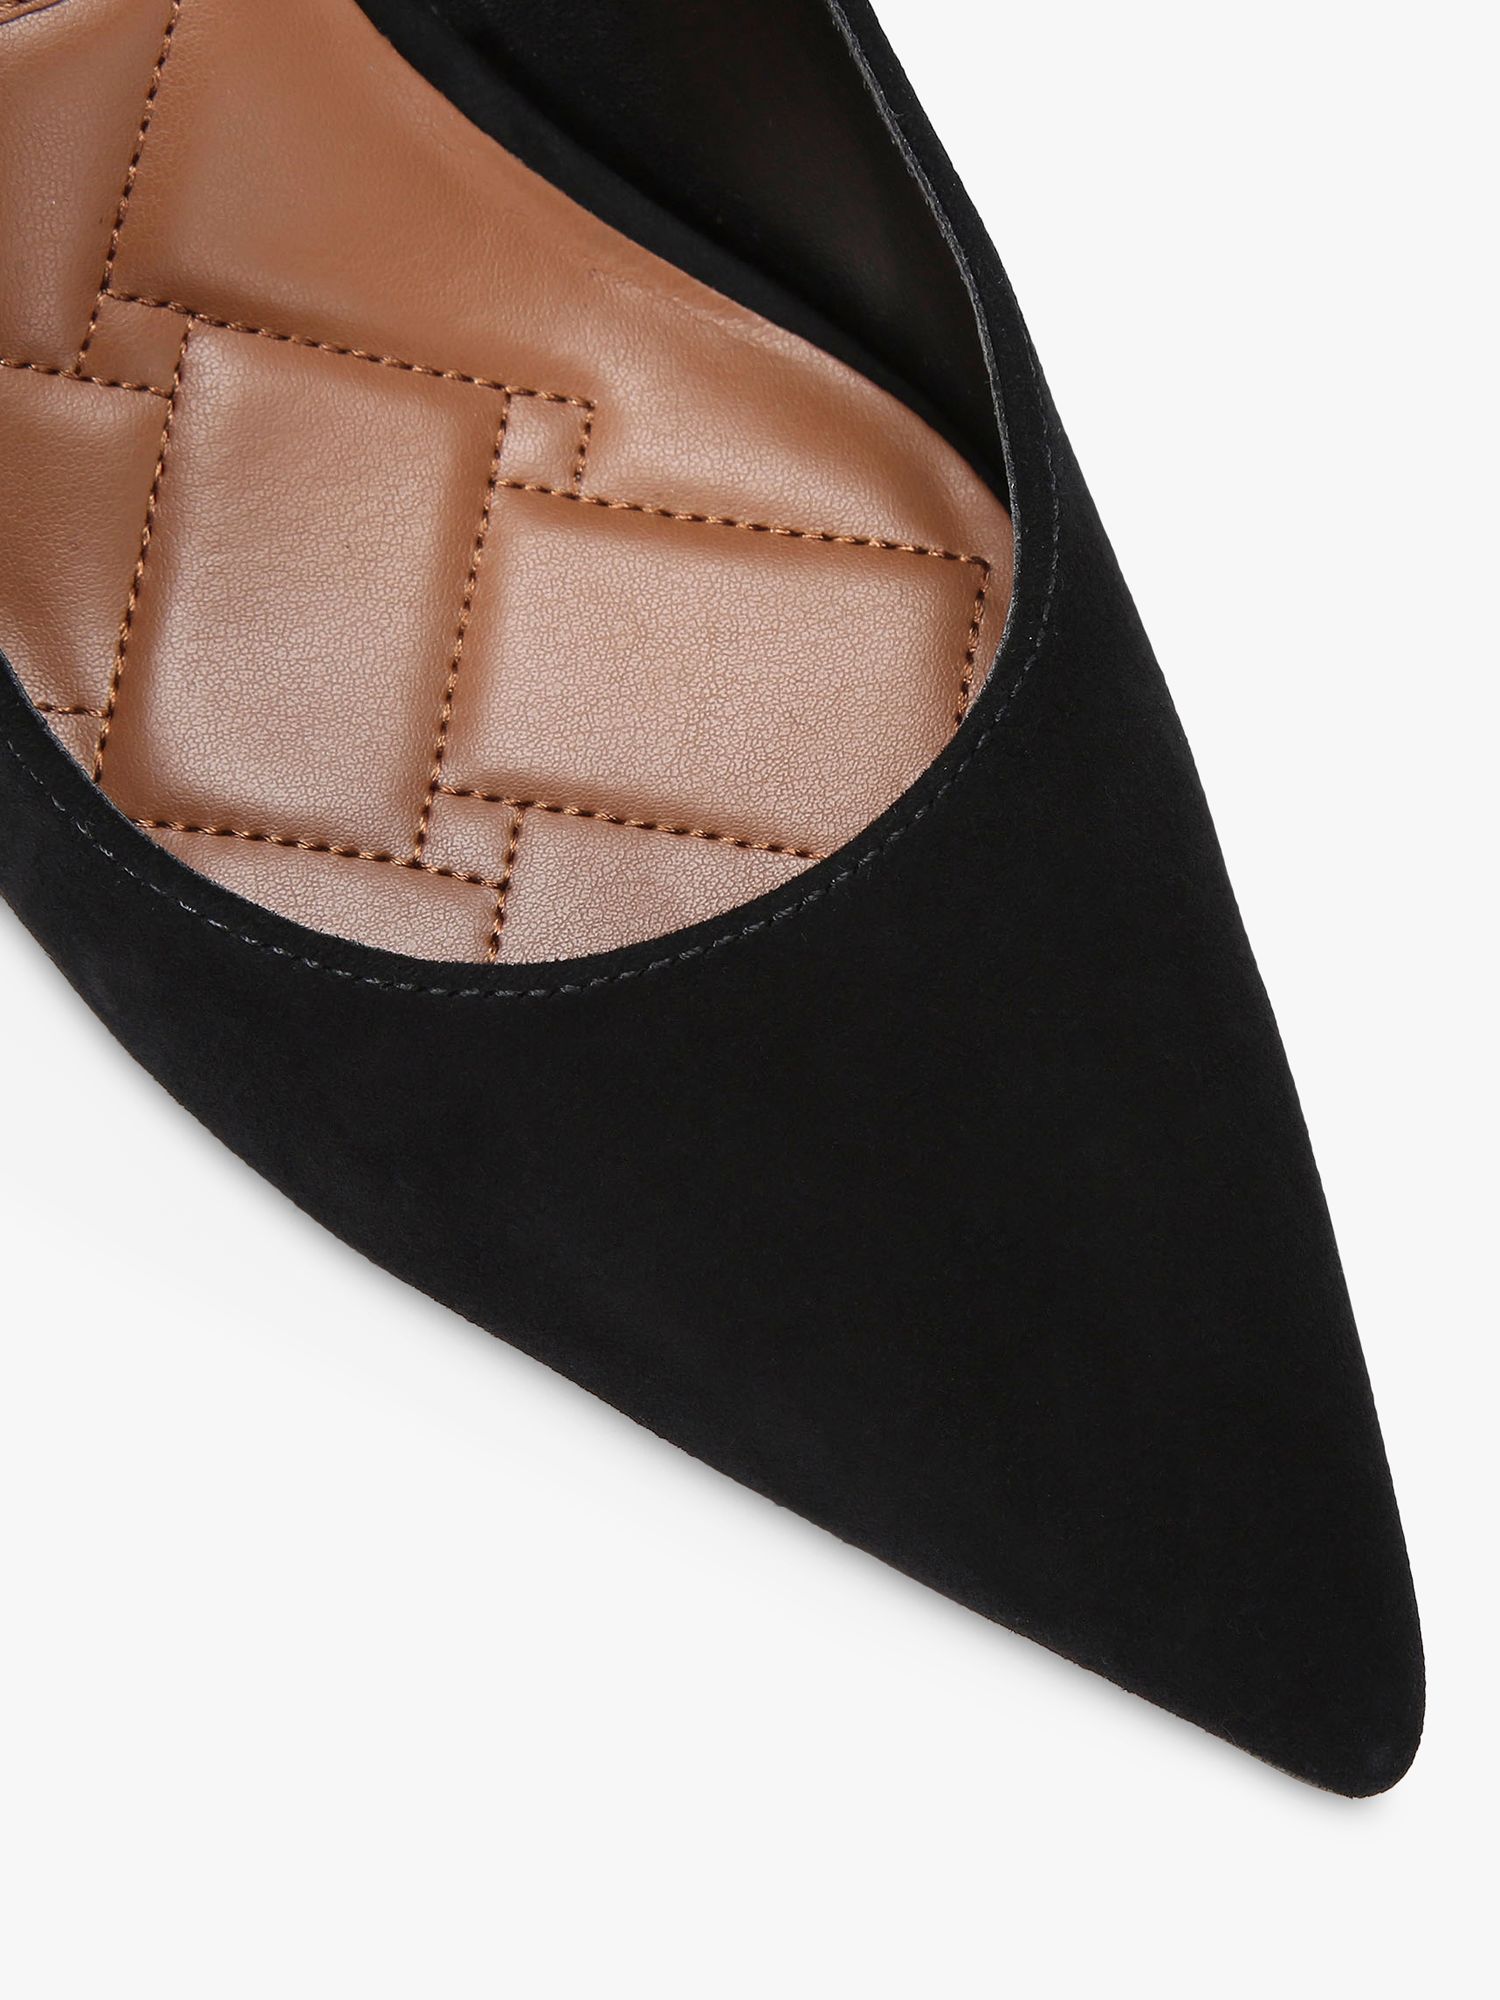 Kurt Geiger London Belgravia Suede Slingback Court Shoes, Black, 3